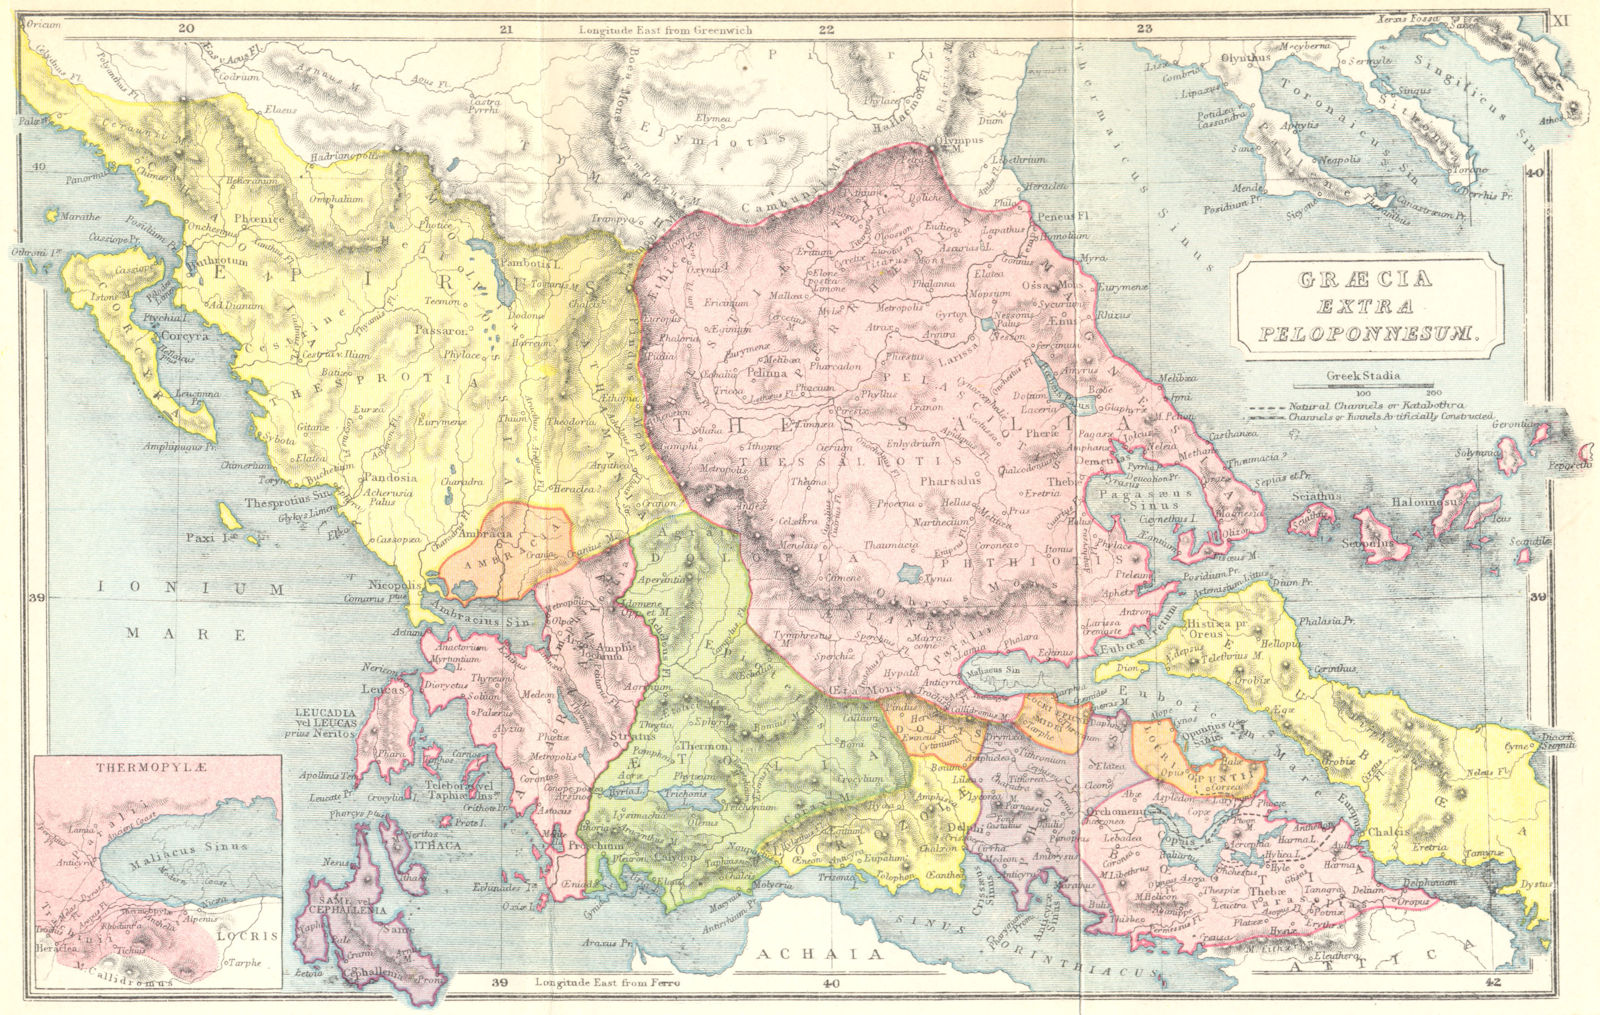 GREECE. Graecia extra Peloponnesum; Thermopylae 1908 old antique map chart